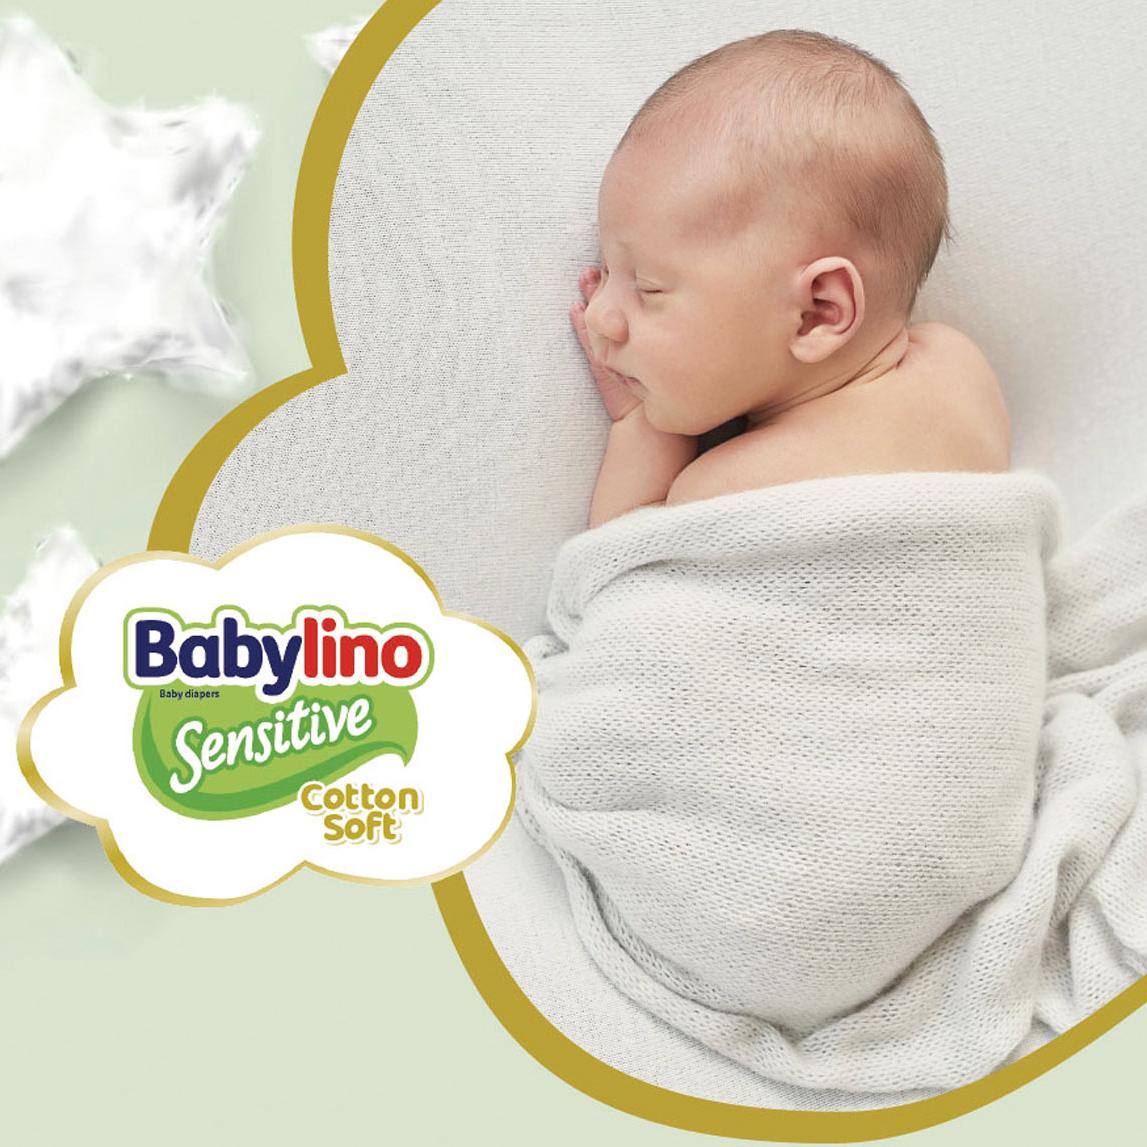 Babylino Sensitive Cotton Soft